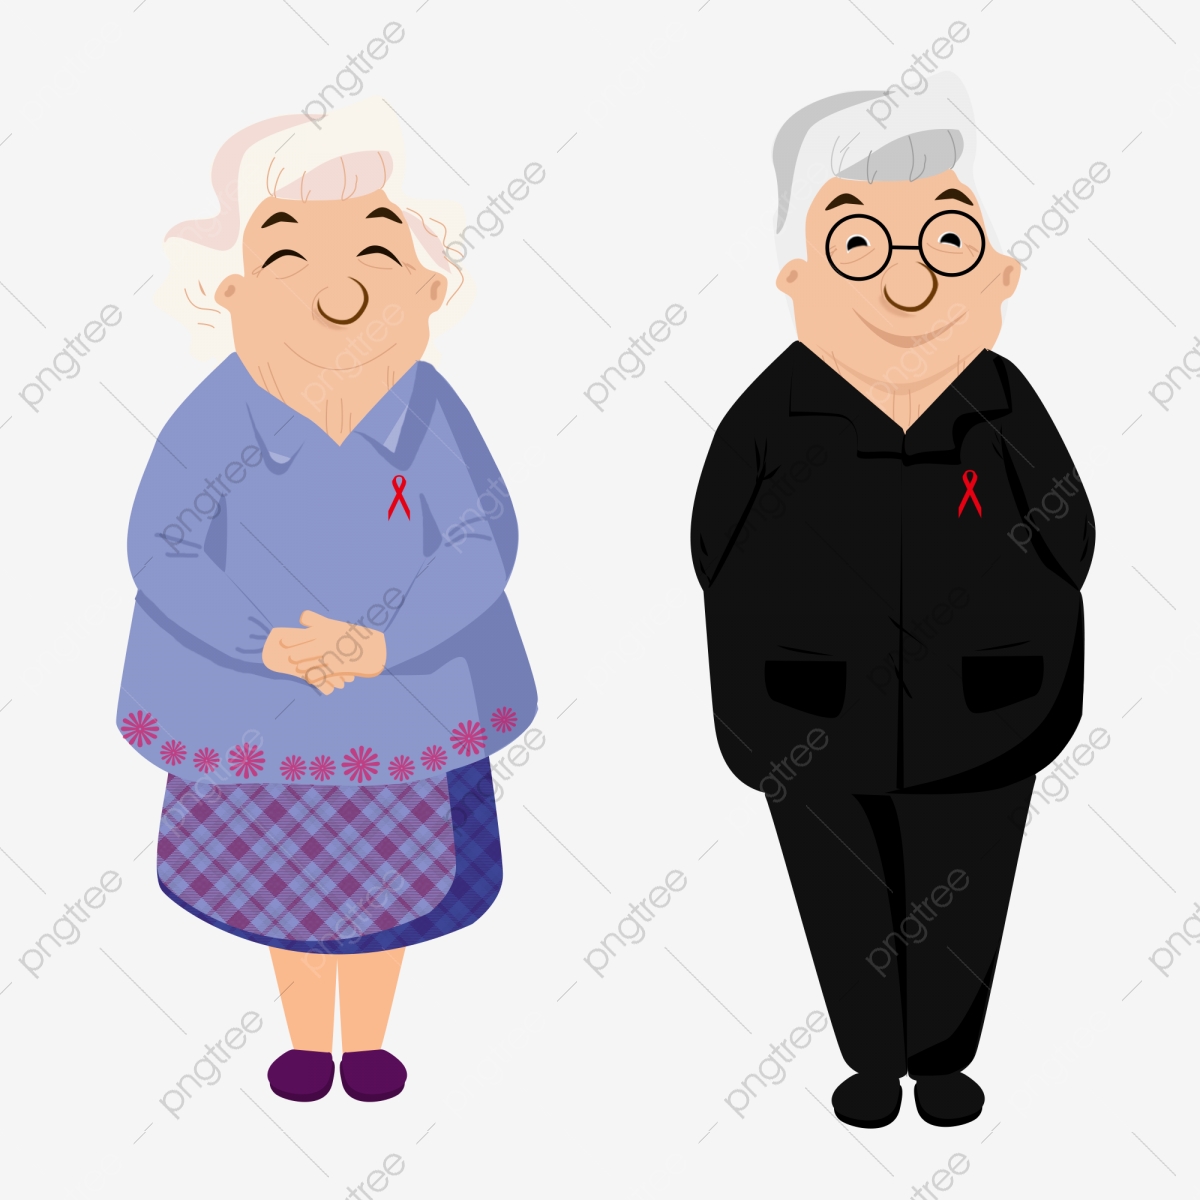 grandparents clipart elderly